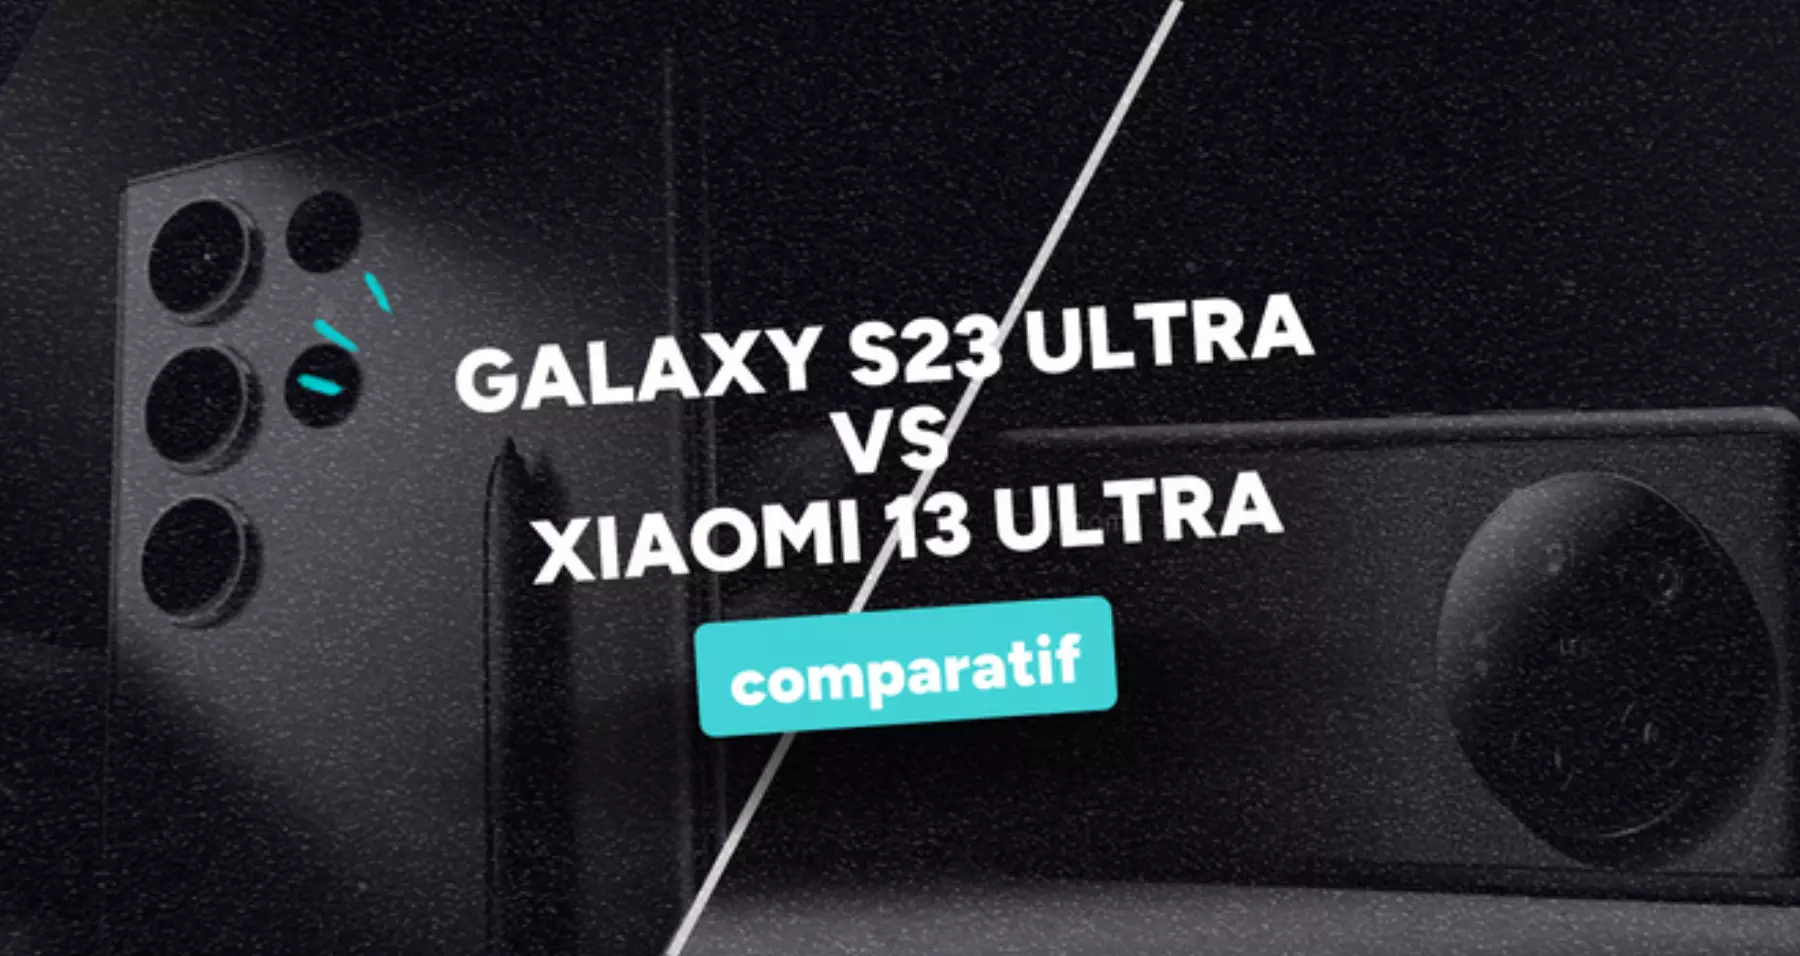 Bloc écran d'origine Samsung Galaxy S21 Ultra noir